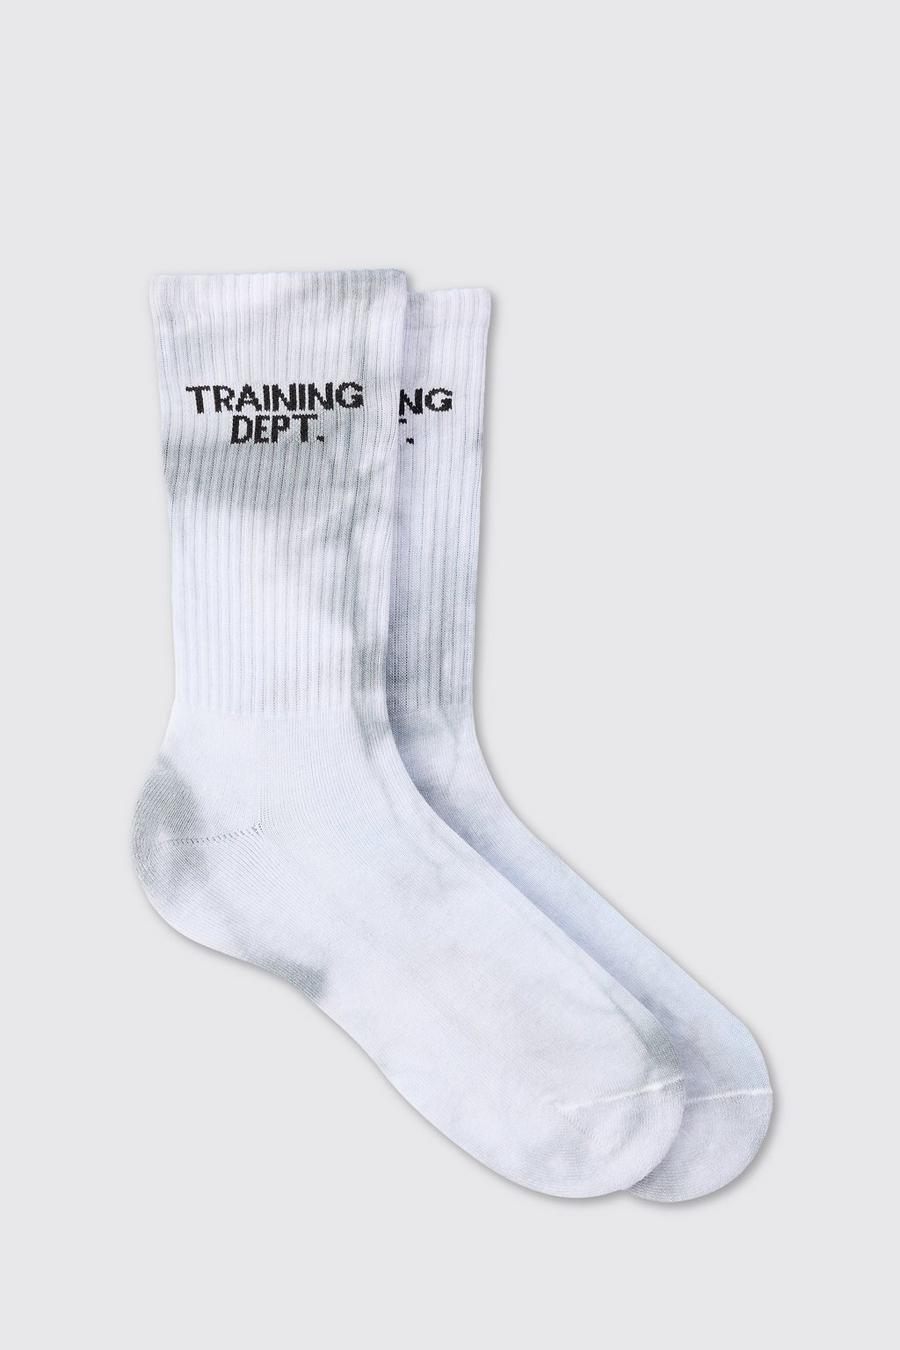 Light grey Man Active Training Dept Tie-dye Crew Socks